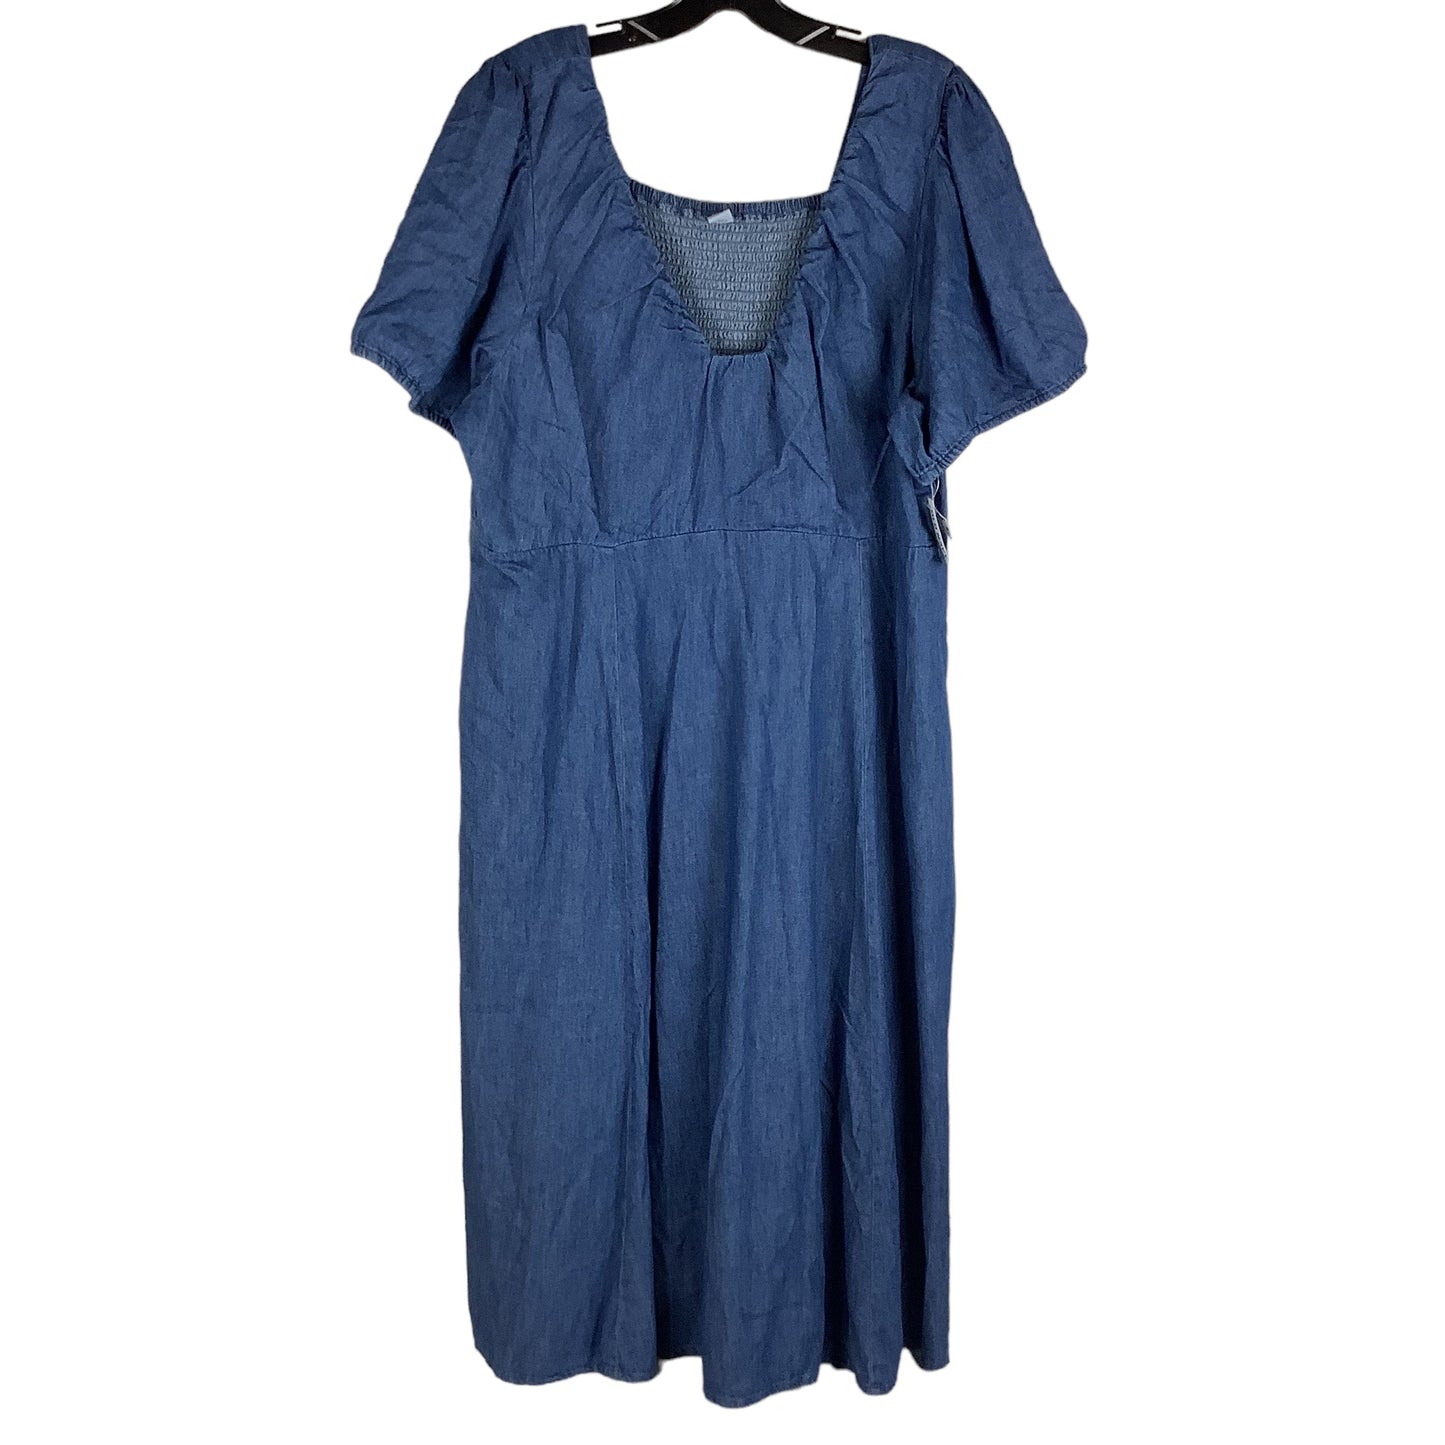 Blue Dress Casual Maxi Old Navy, Size Xxl petite